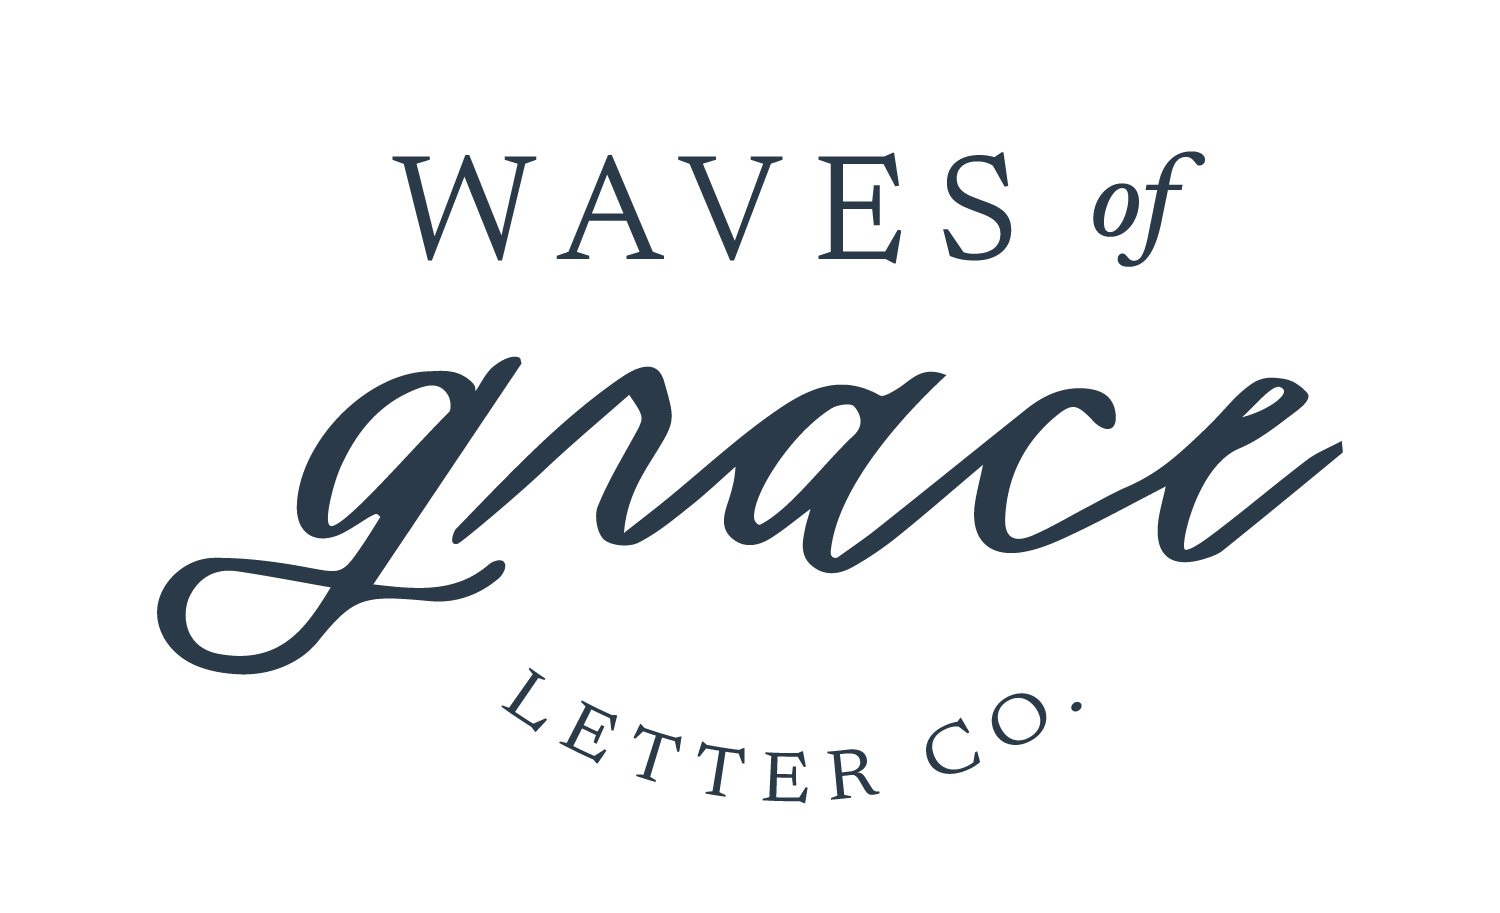 Waves of Grace Letter Co.